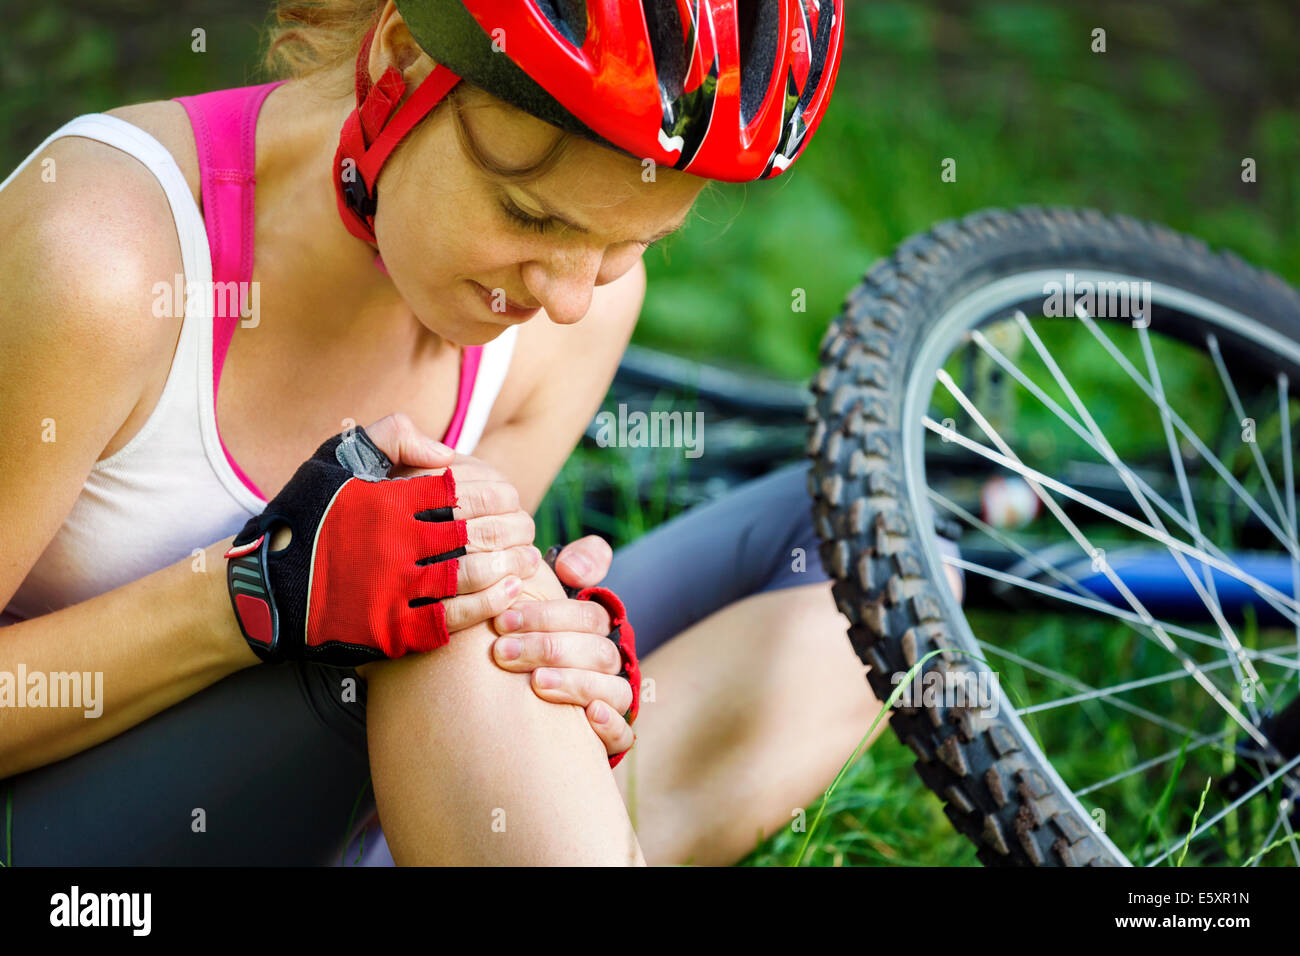 Young woman fell off mountain bike. Stock Photo